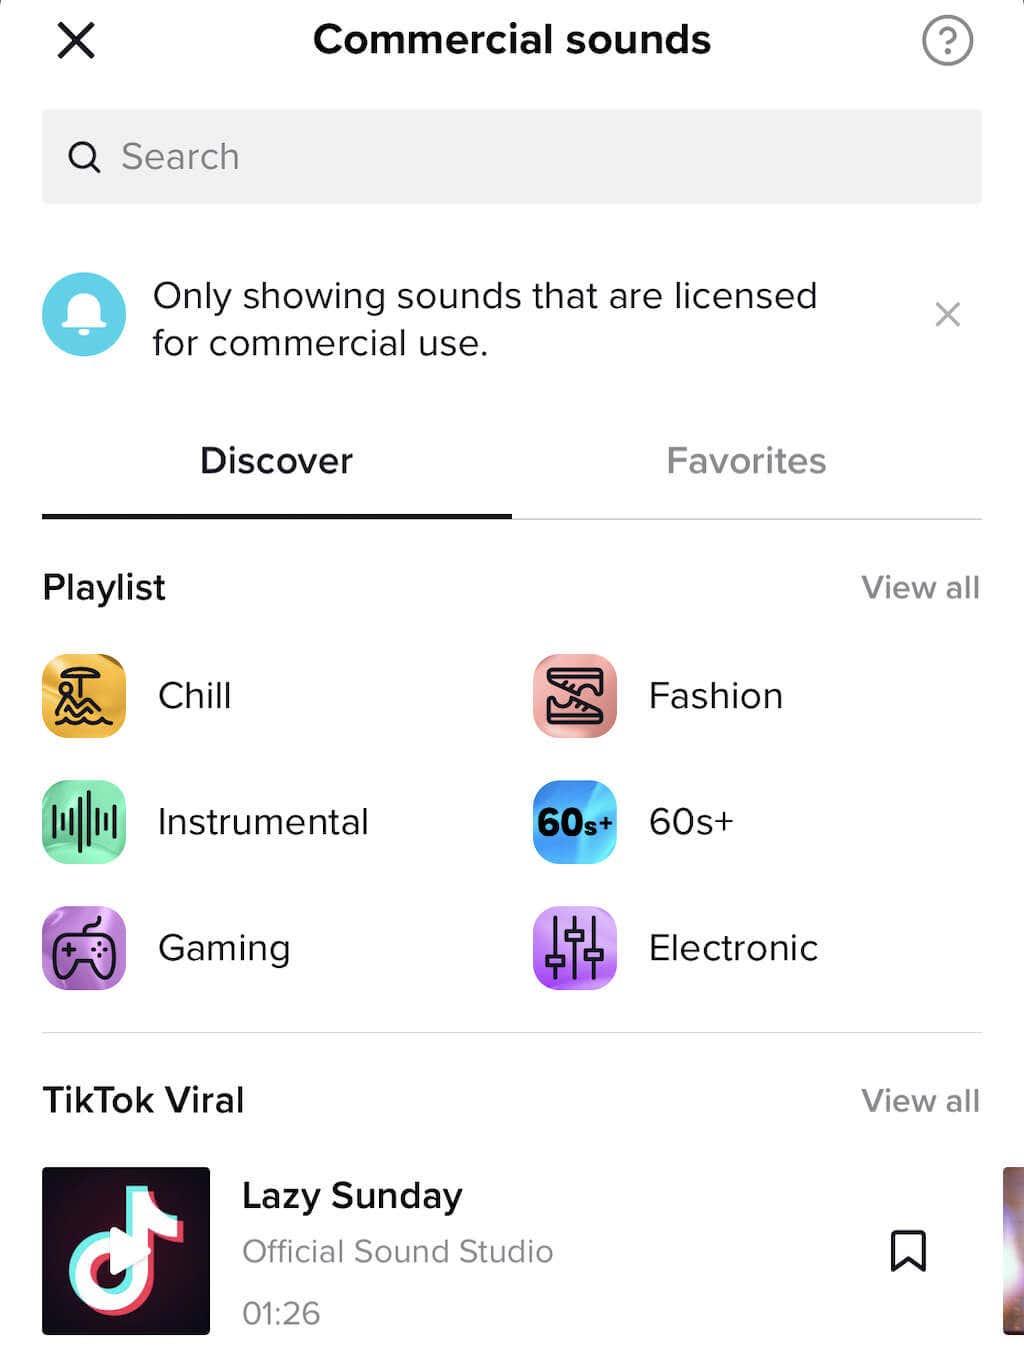 TikTokビデオで使用されている曲やオーディオを見つける方法